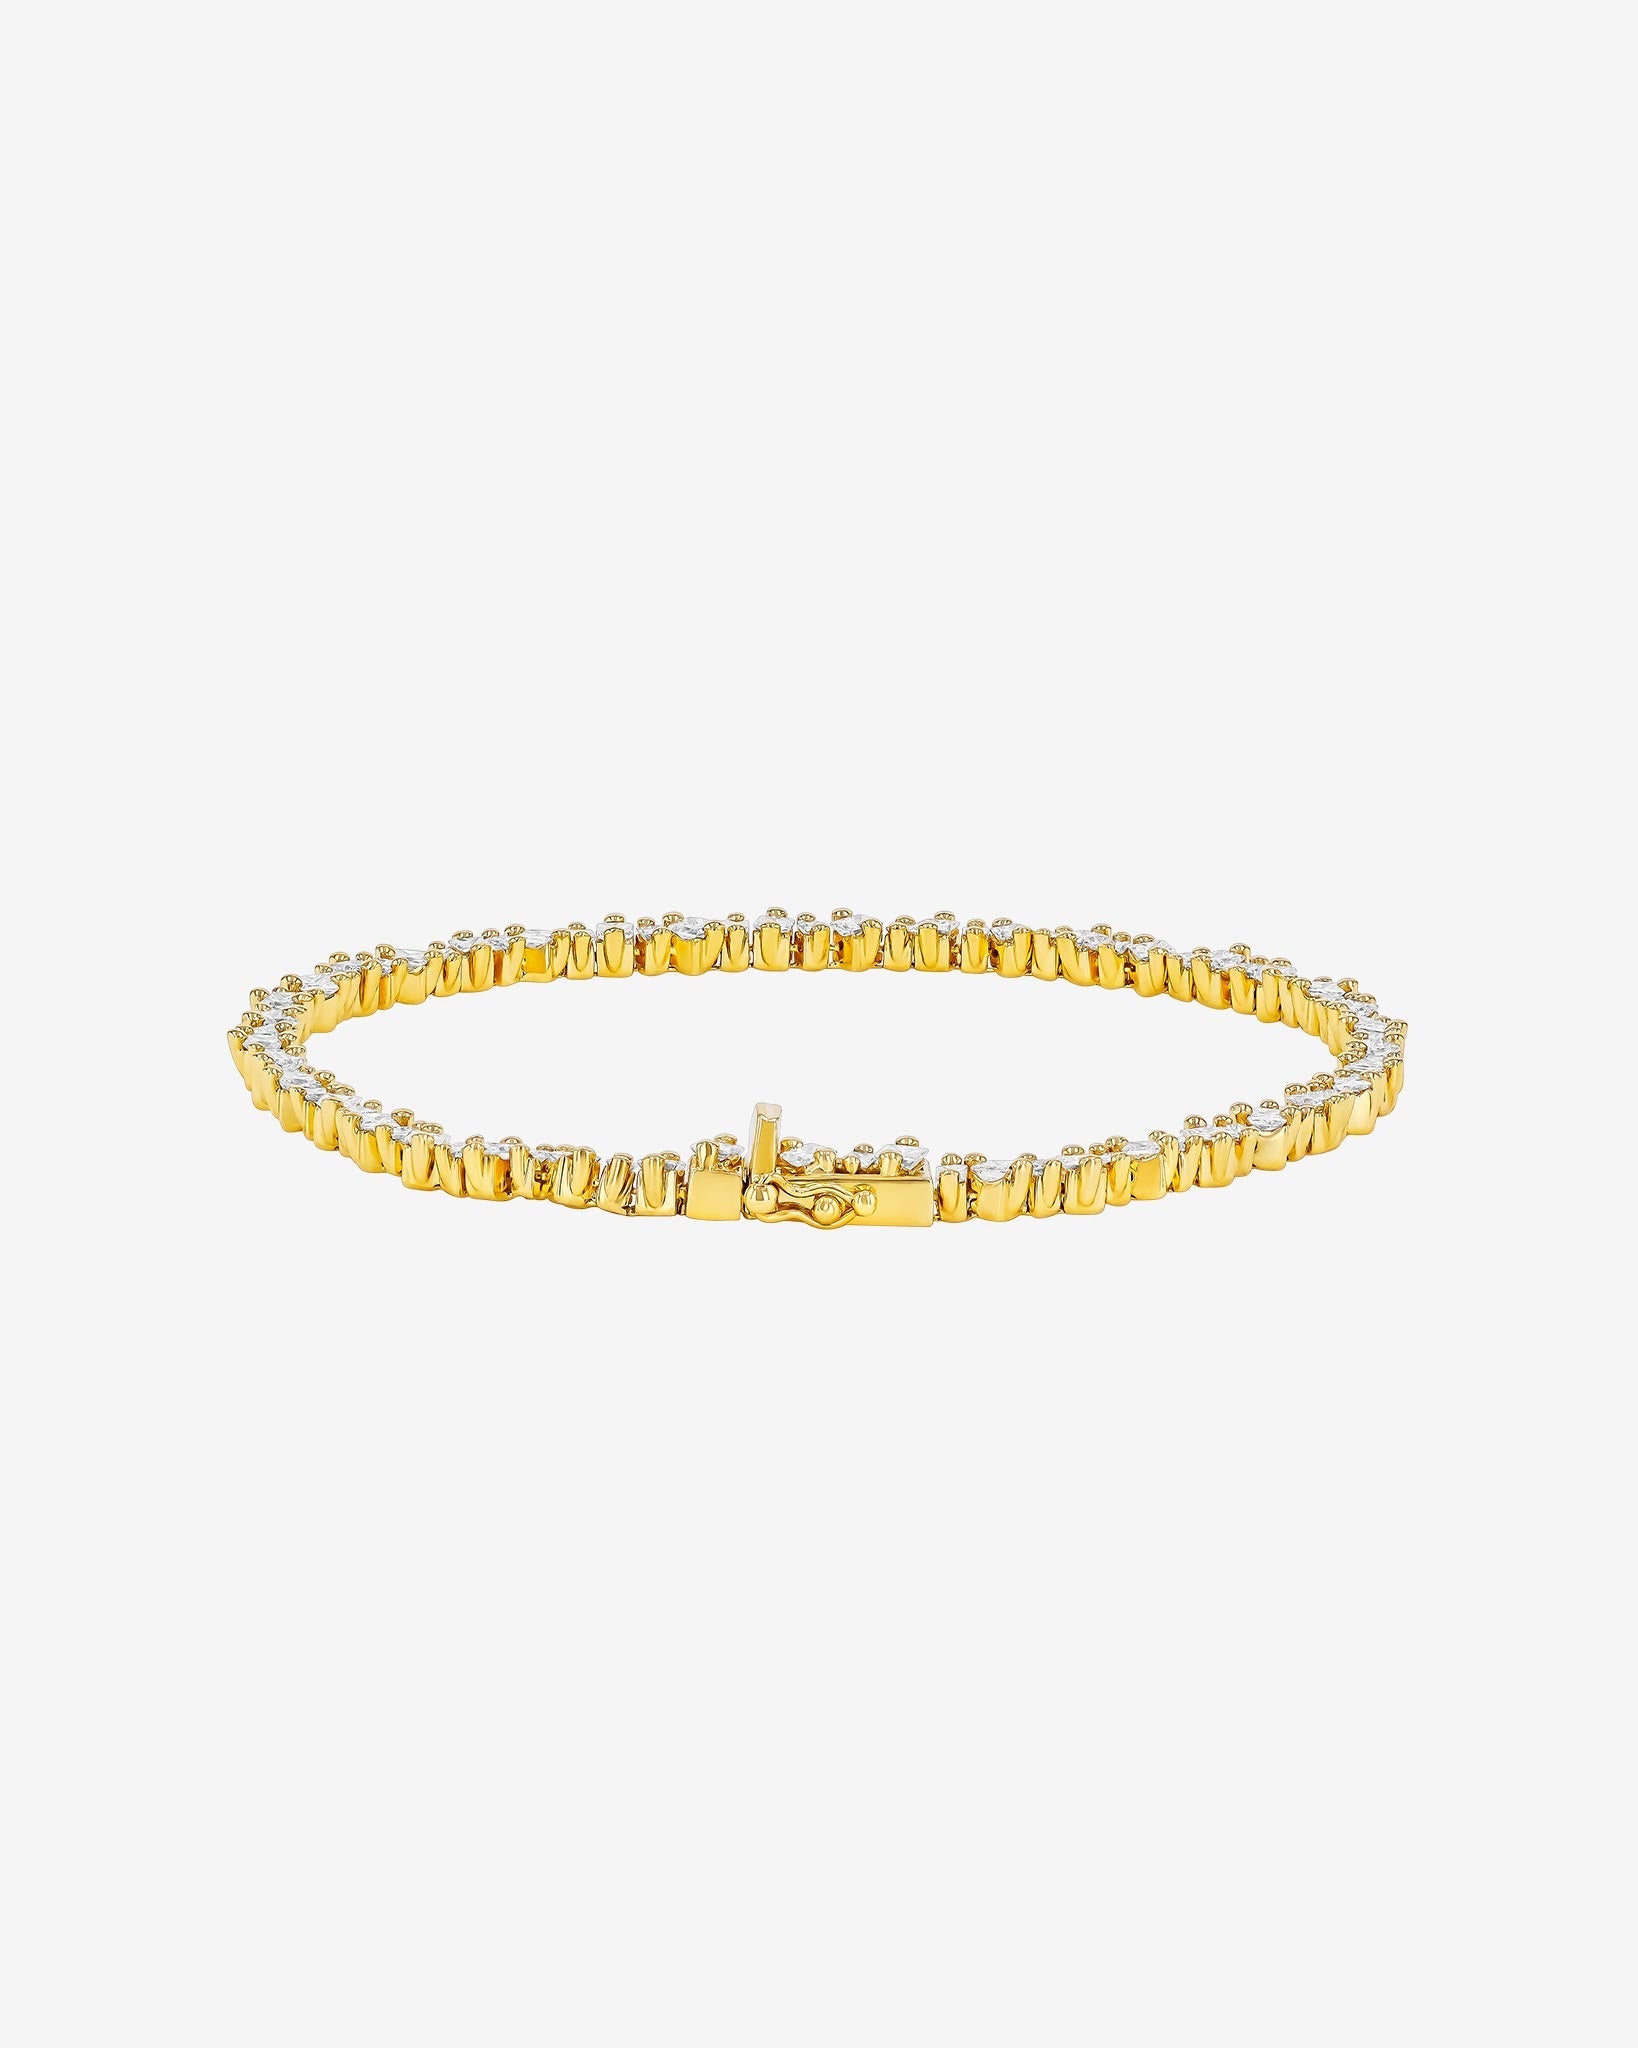 Suzanne Kalan La Fantaisie Cosmic Diamond Tennis Bracelet in 18k yellow gold